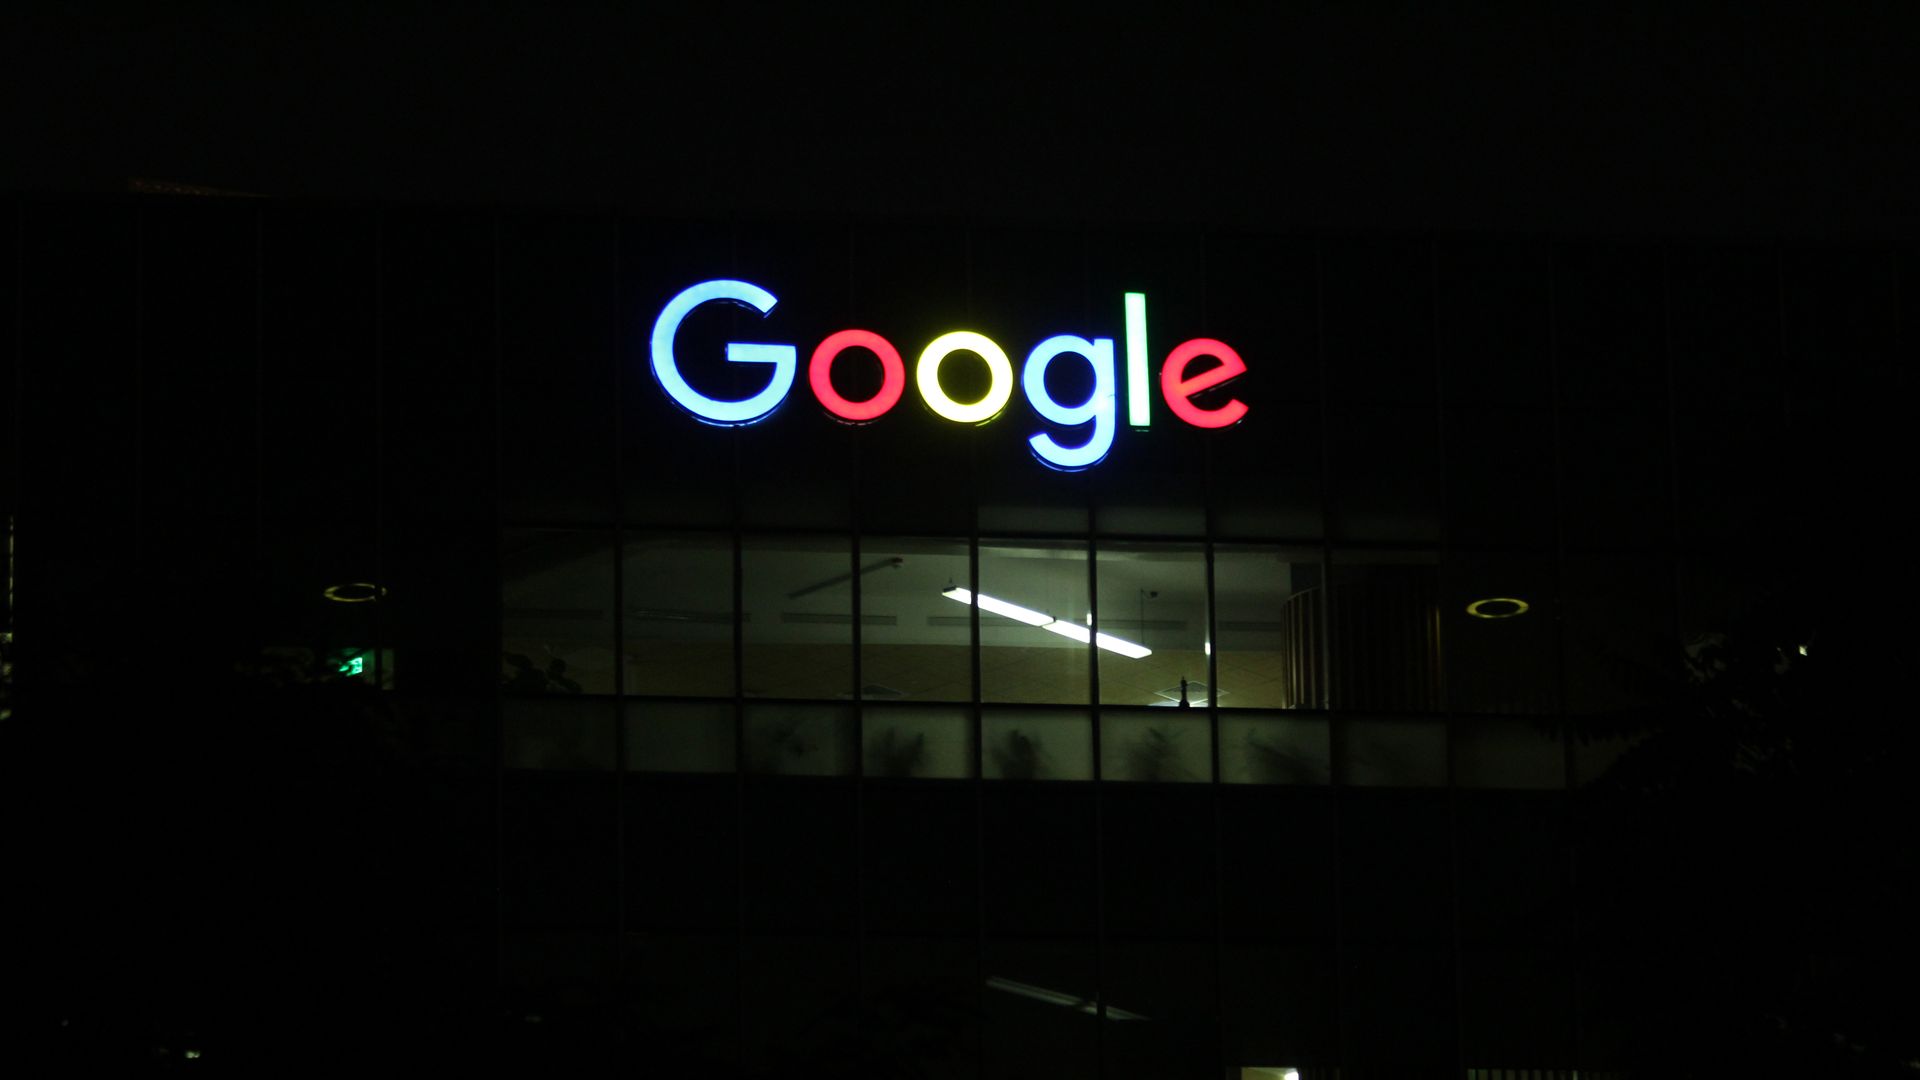 Google logo lit up outside building in the dark